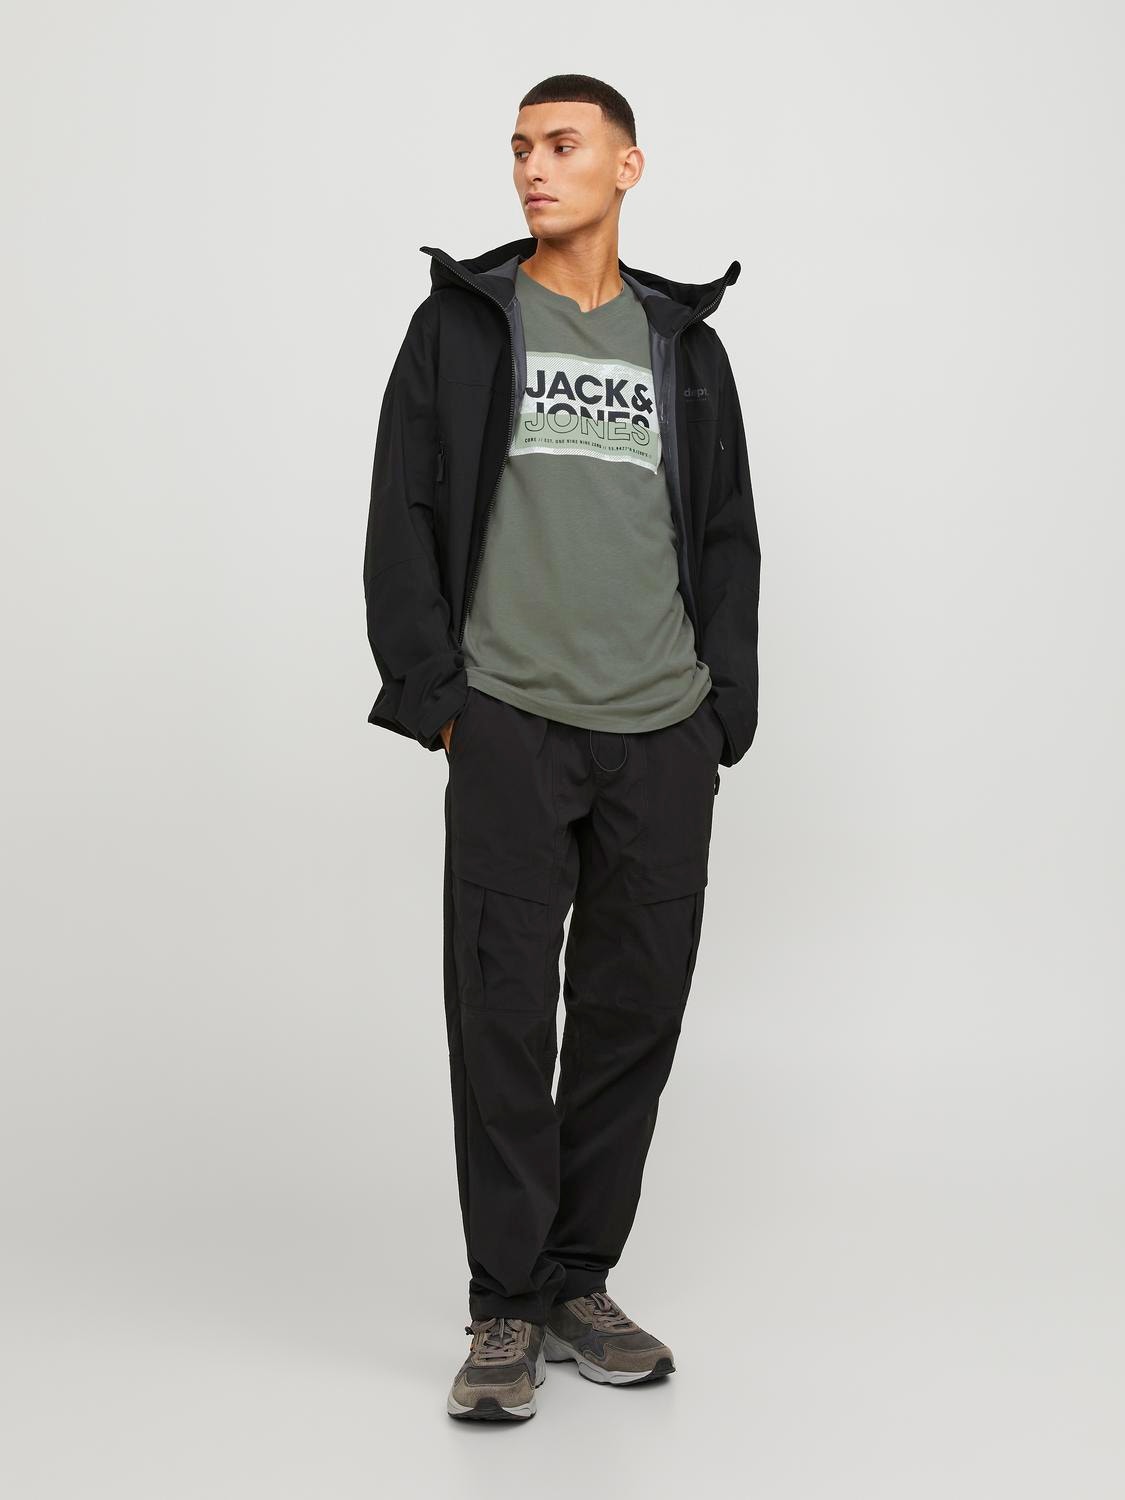 Jack & Jones Logo Crew neck T-shirt -Agave Green - 12253442